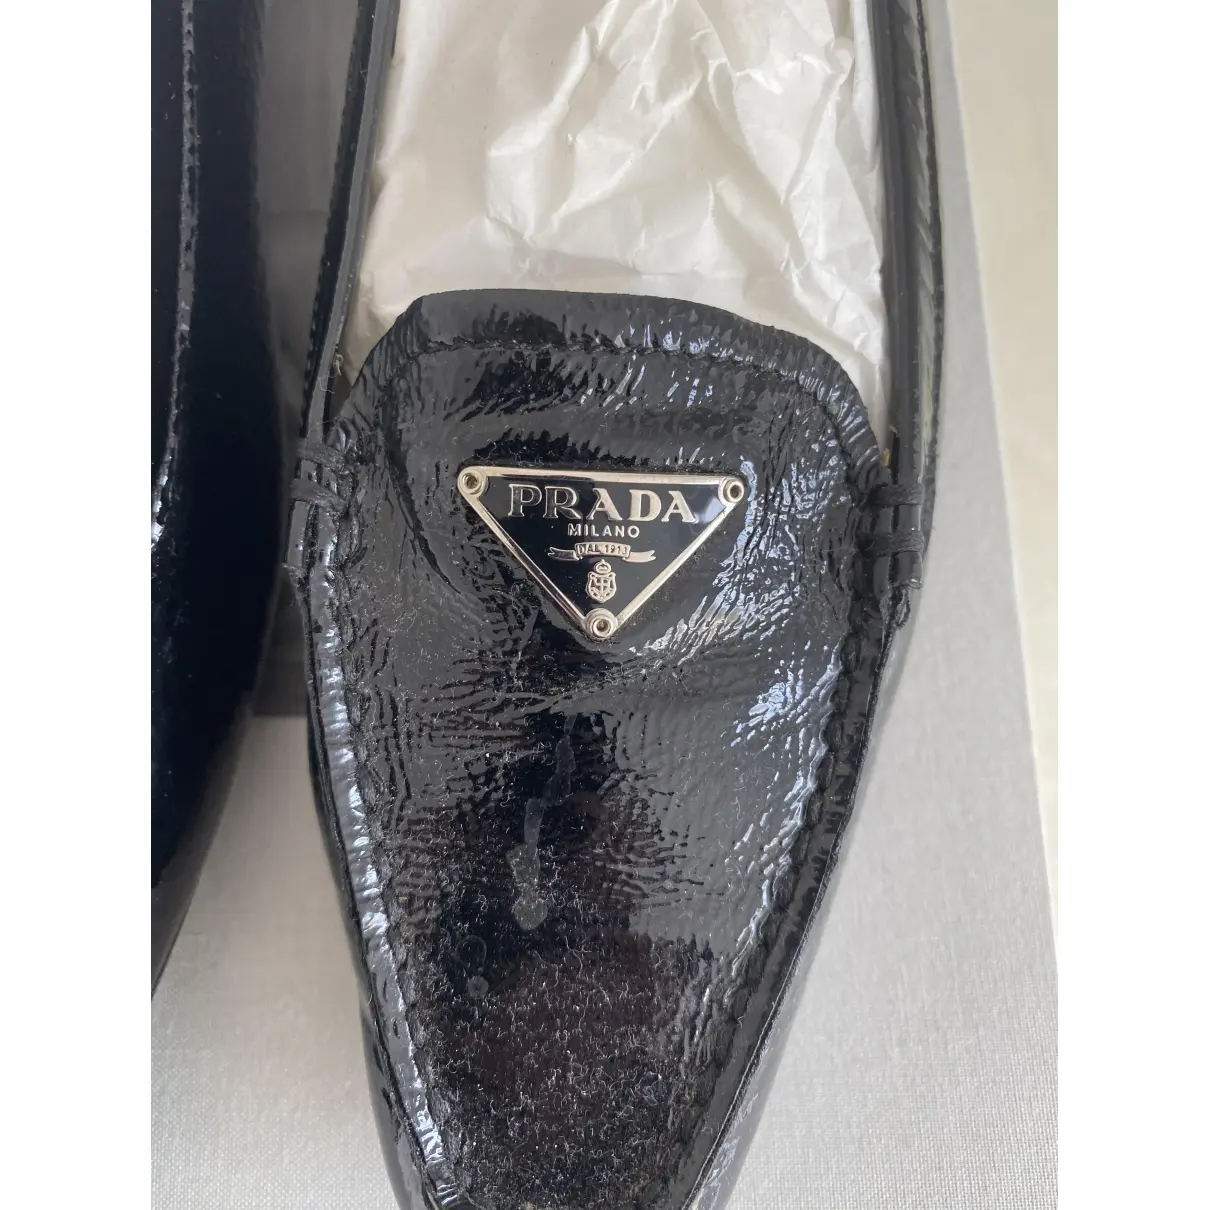 Buy Prada Patent leather flats online - Vintage